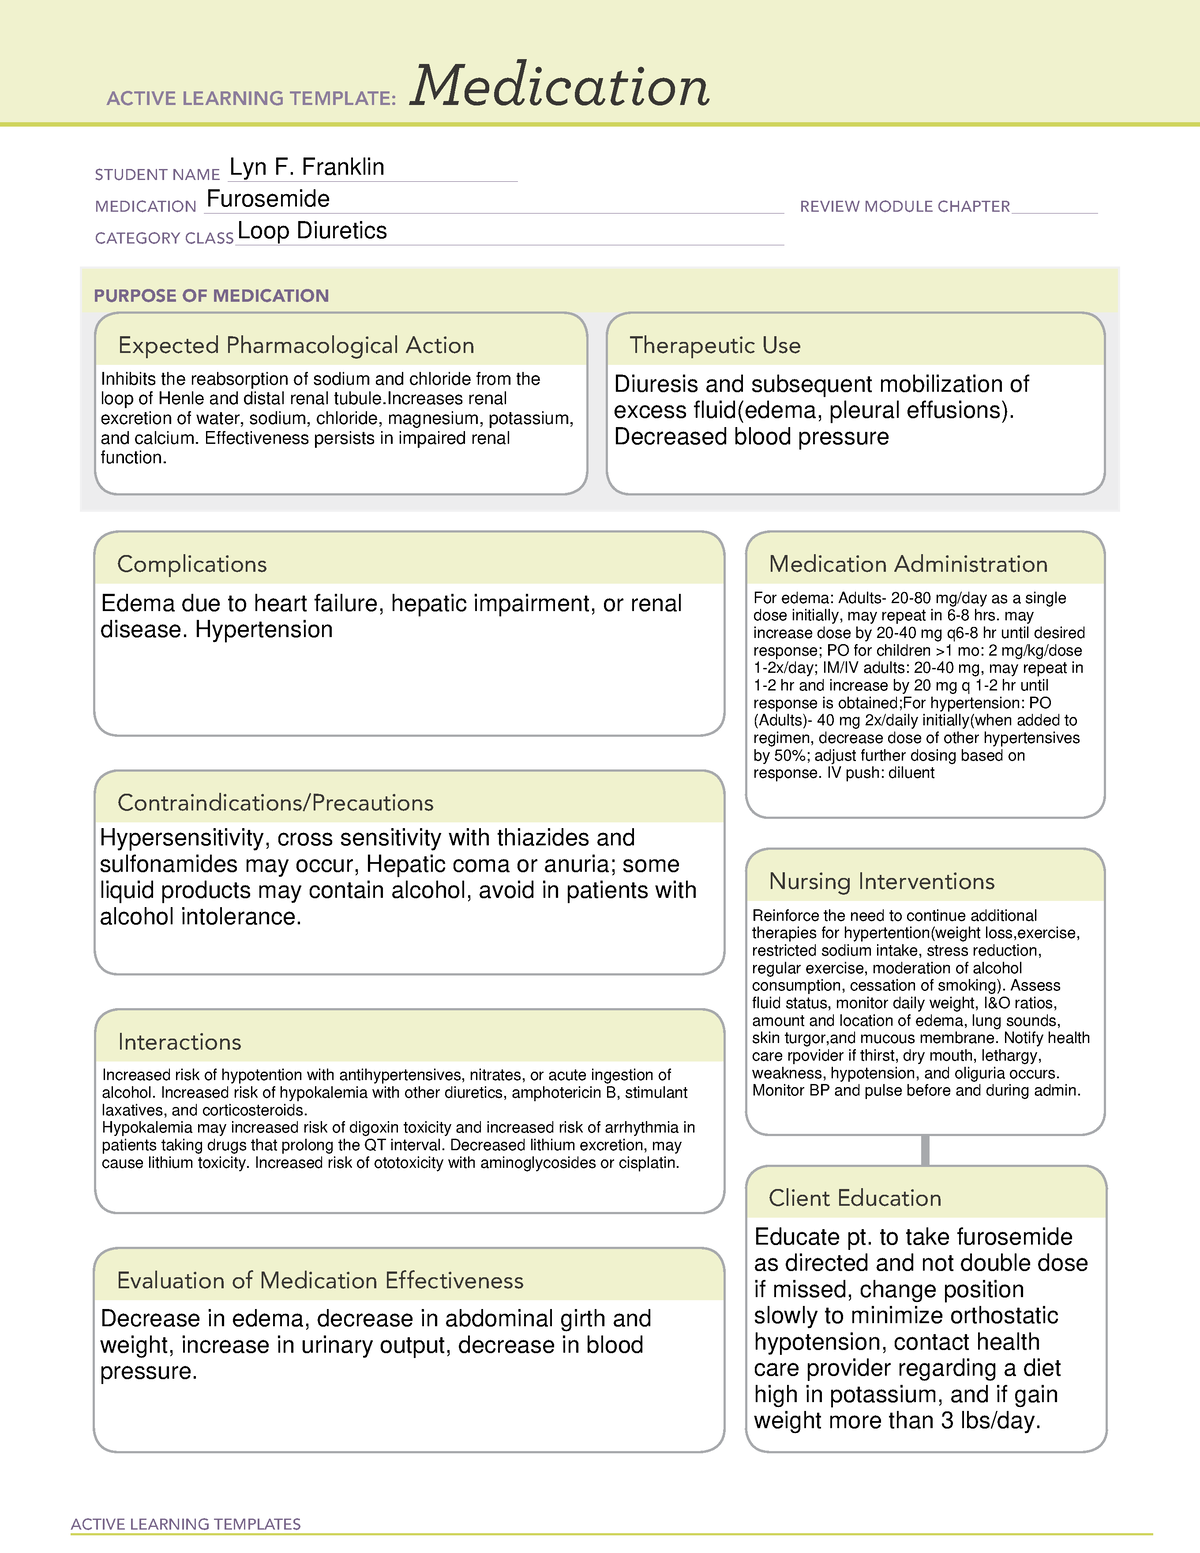 ati-medication-template-furosemide-active-learning-templates